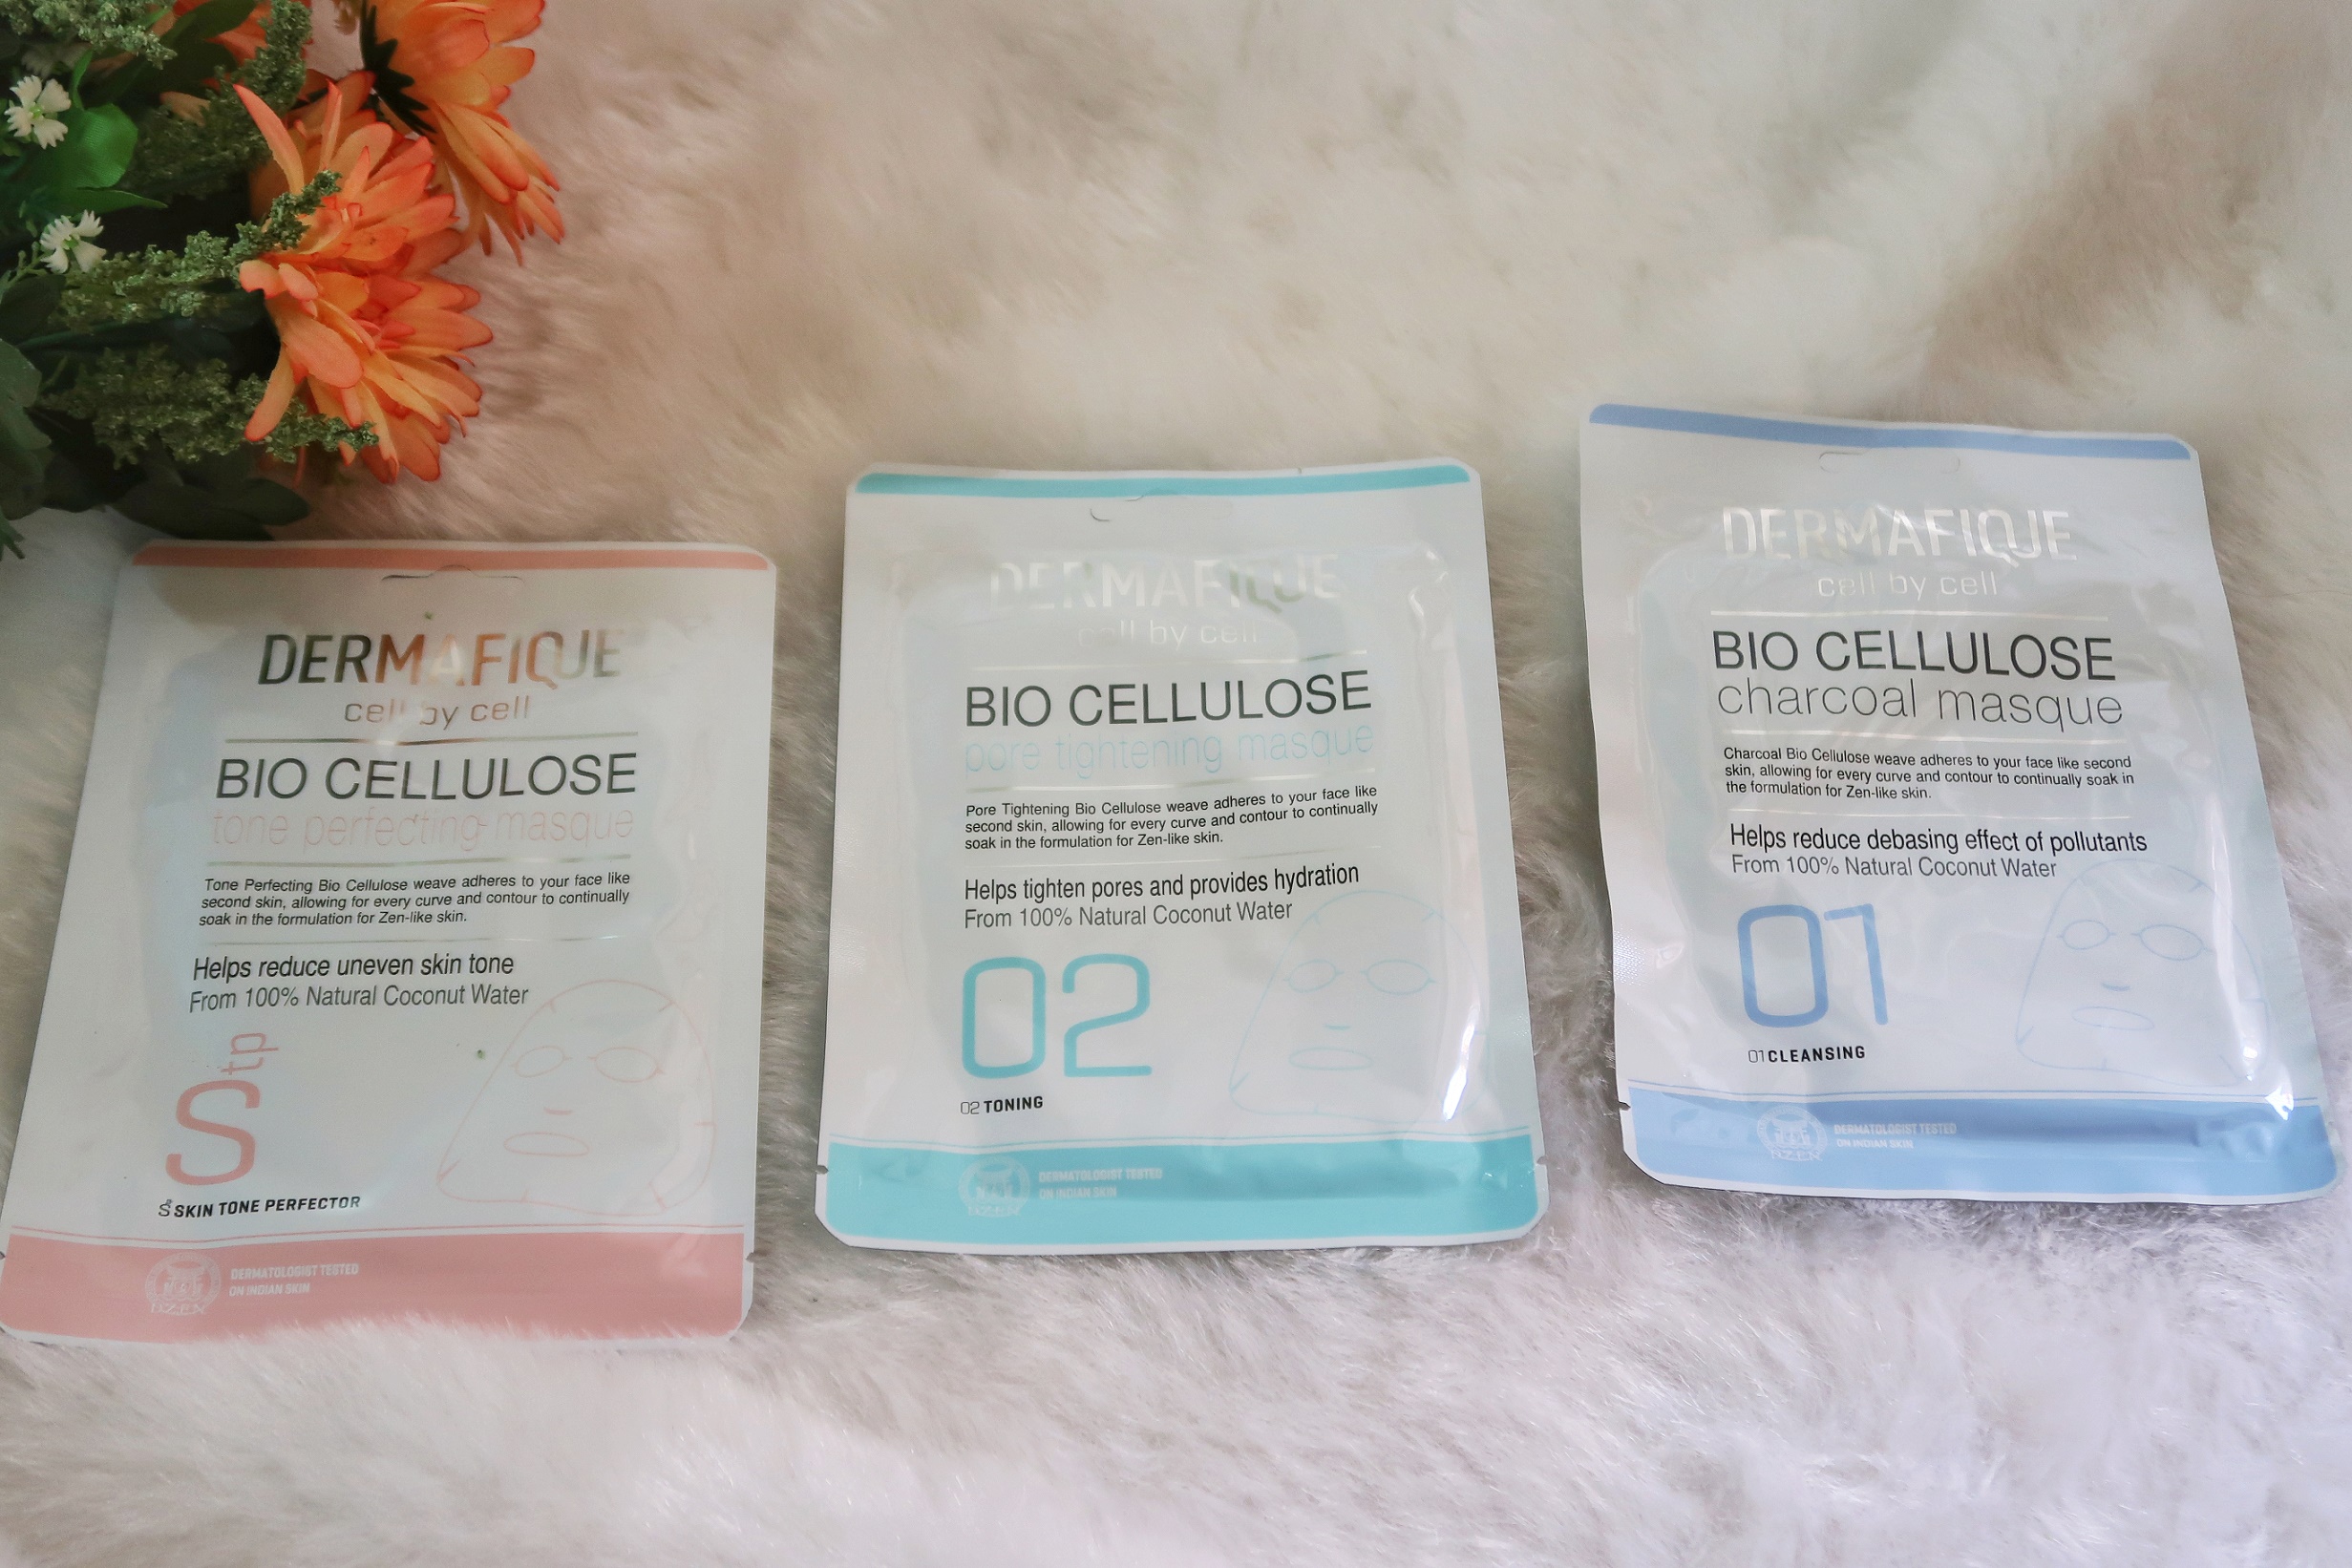 Dermafique Bio Cellulose Face Masque Review